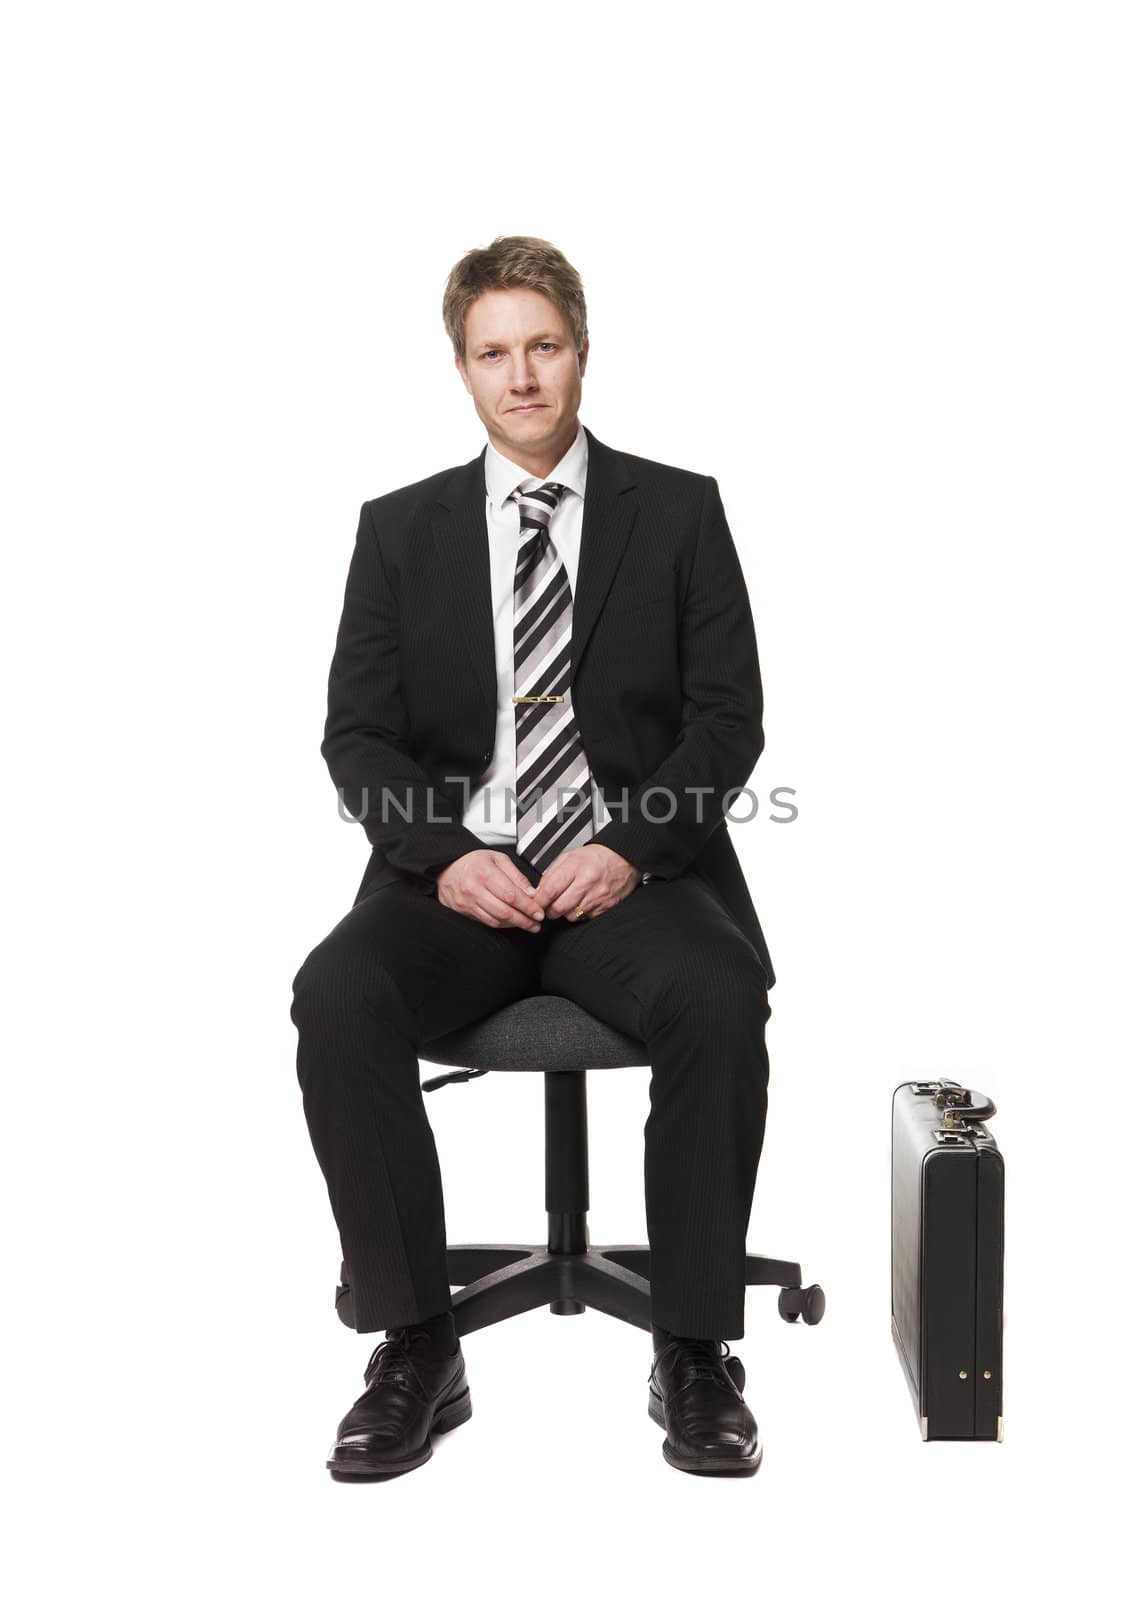 Buisnessman siting on a office chair